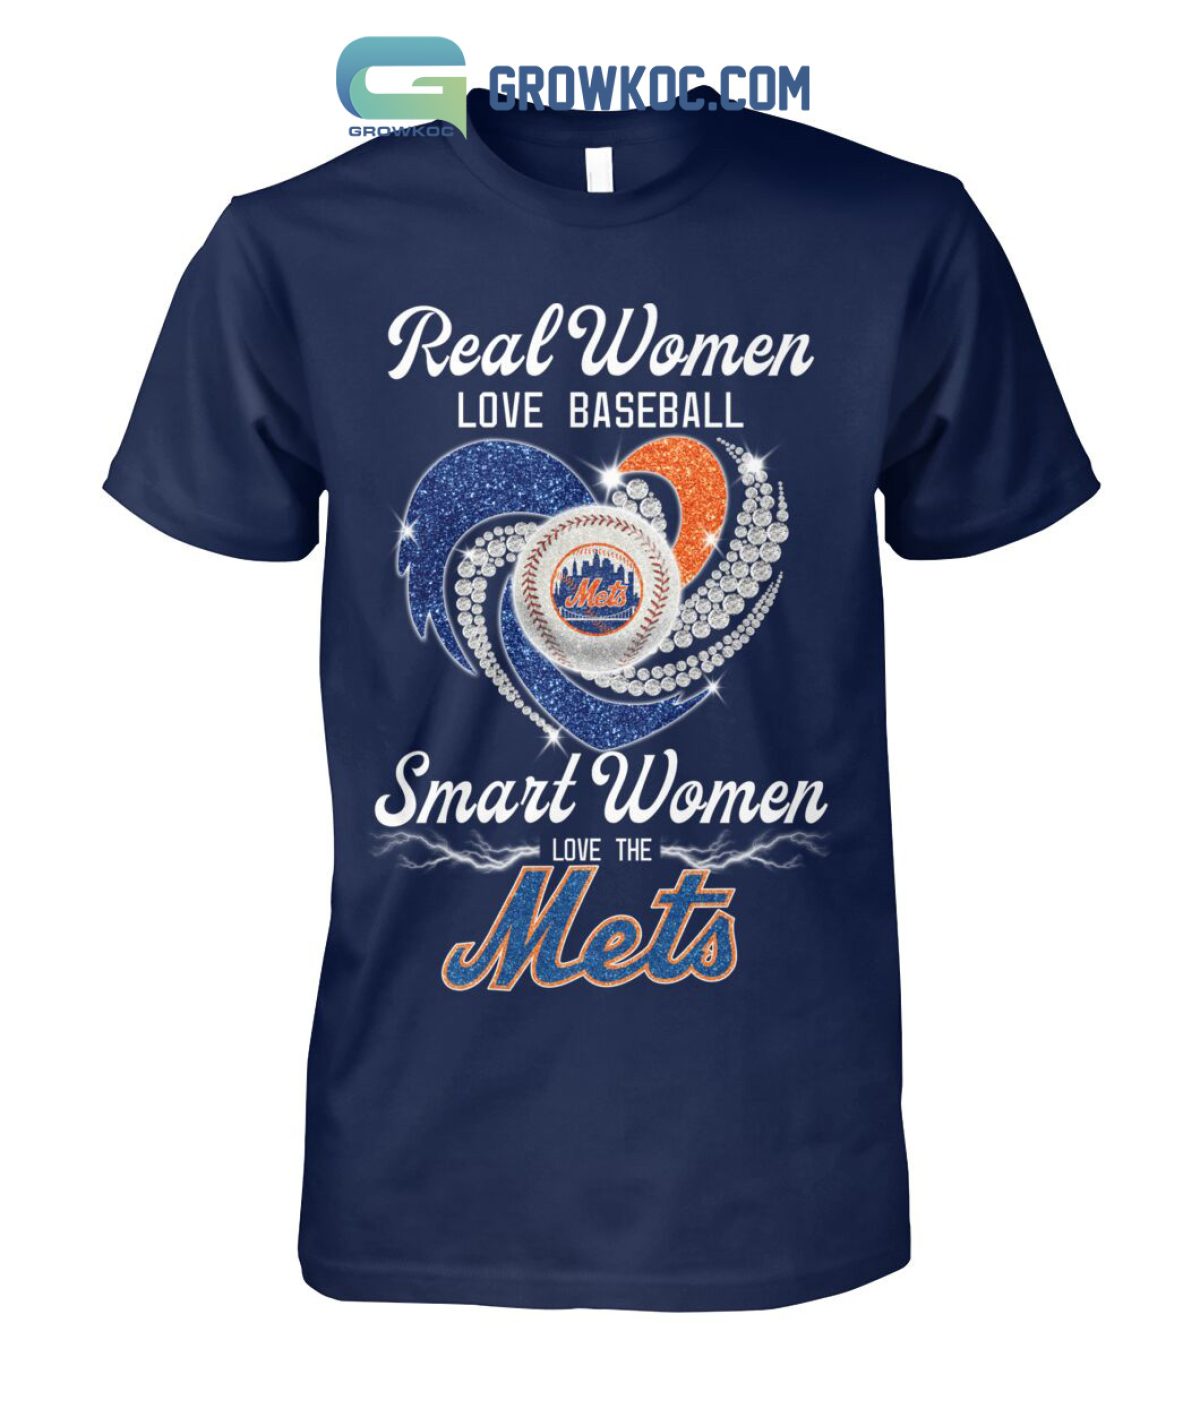 Official real women love baseball smart women love the mets shirt, hoodie,  sweatshirt for men and women